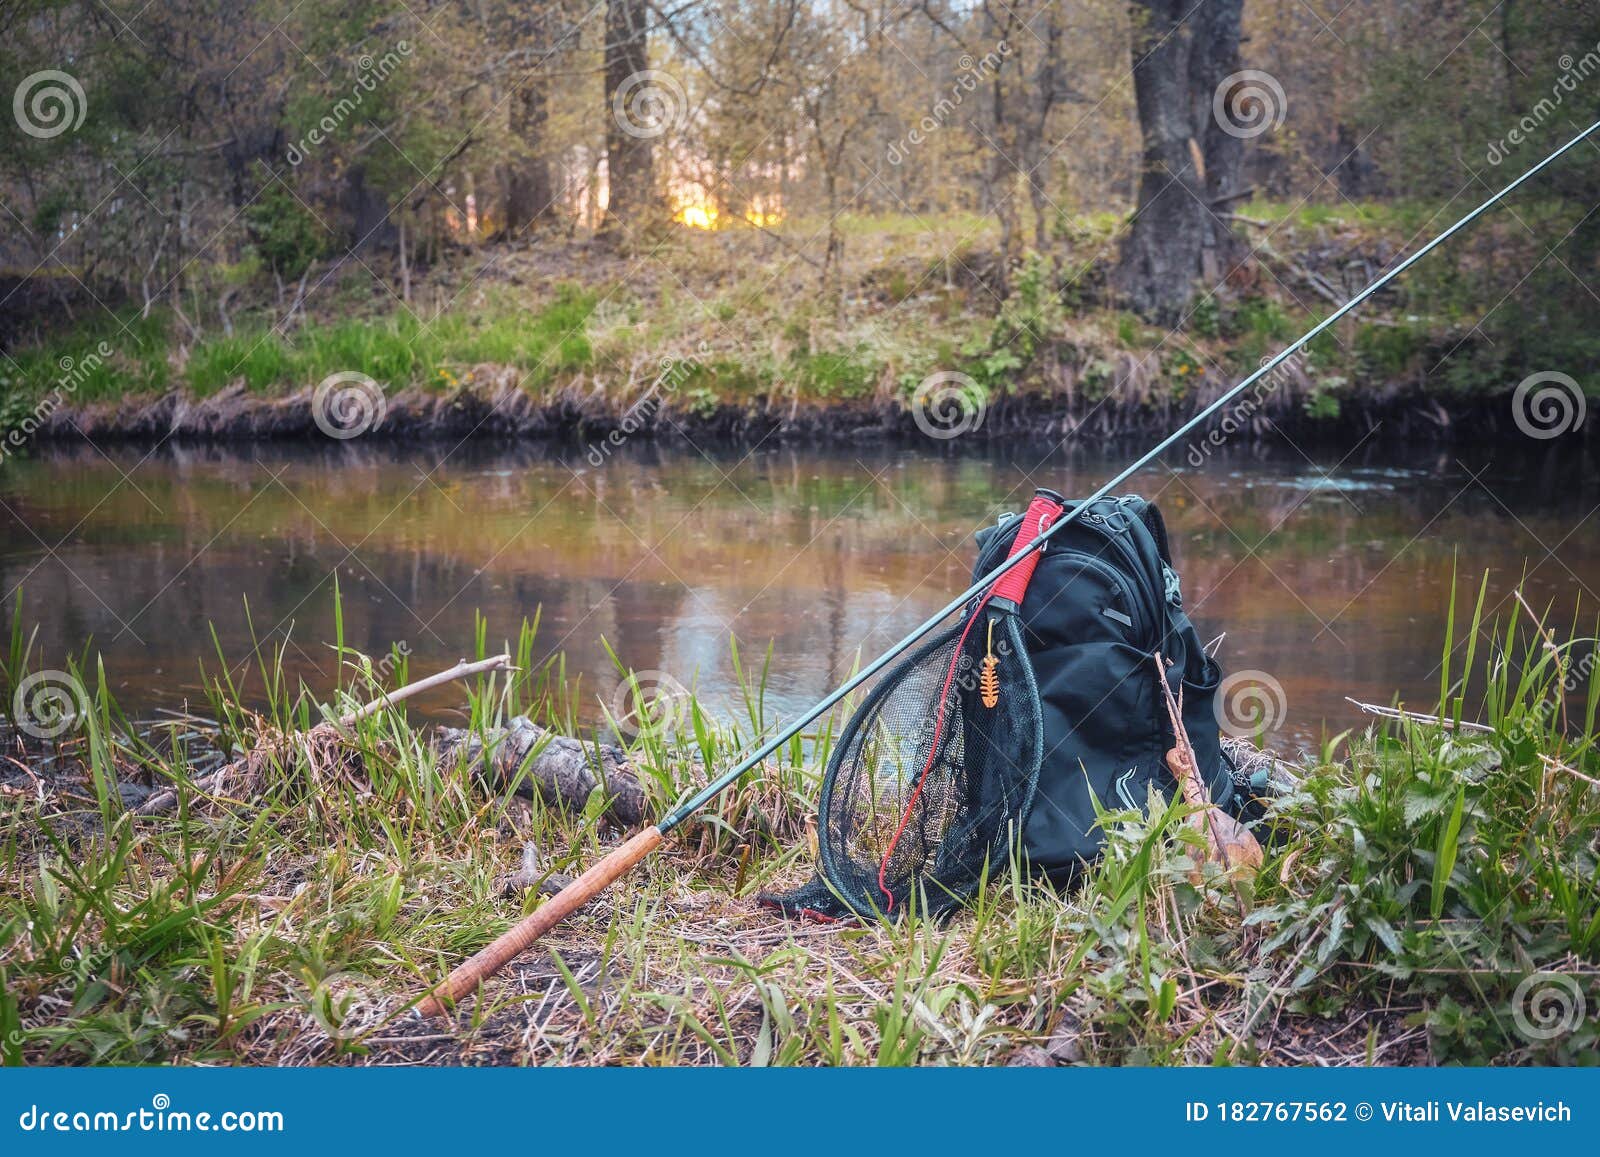 https://thumbs.dreamstime.com/z/fishing-rod-backpack-fishing-gear-river-bank-tenkara-fishing-rod-backpack-fishing-gear-river-bank-tenkara-182767562.jpg